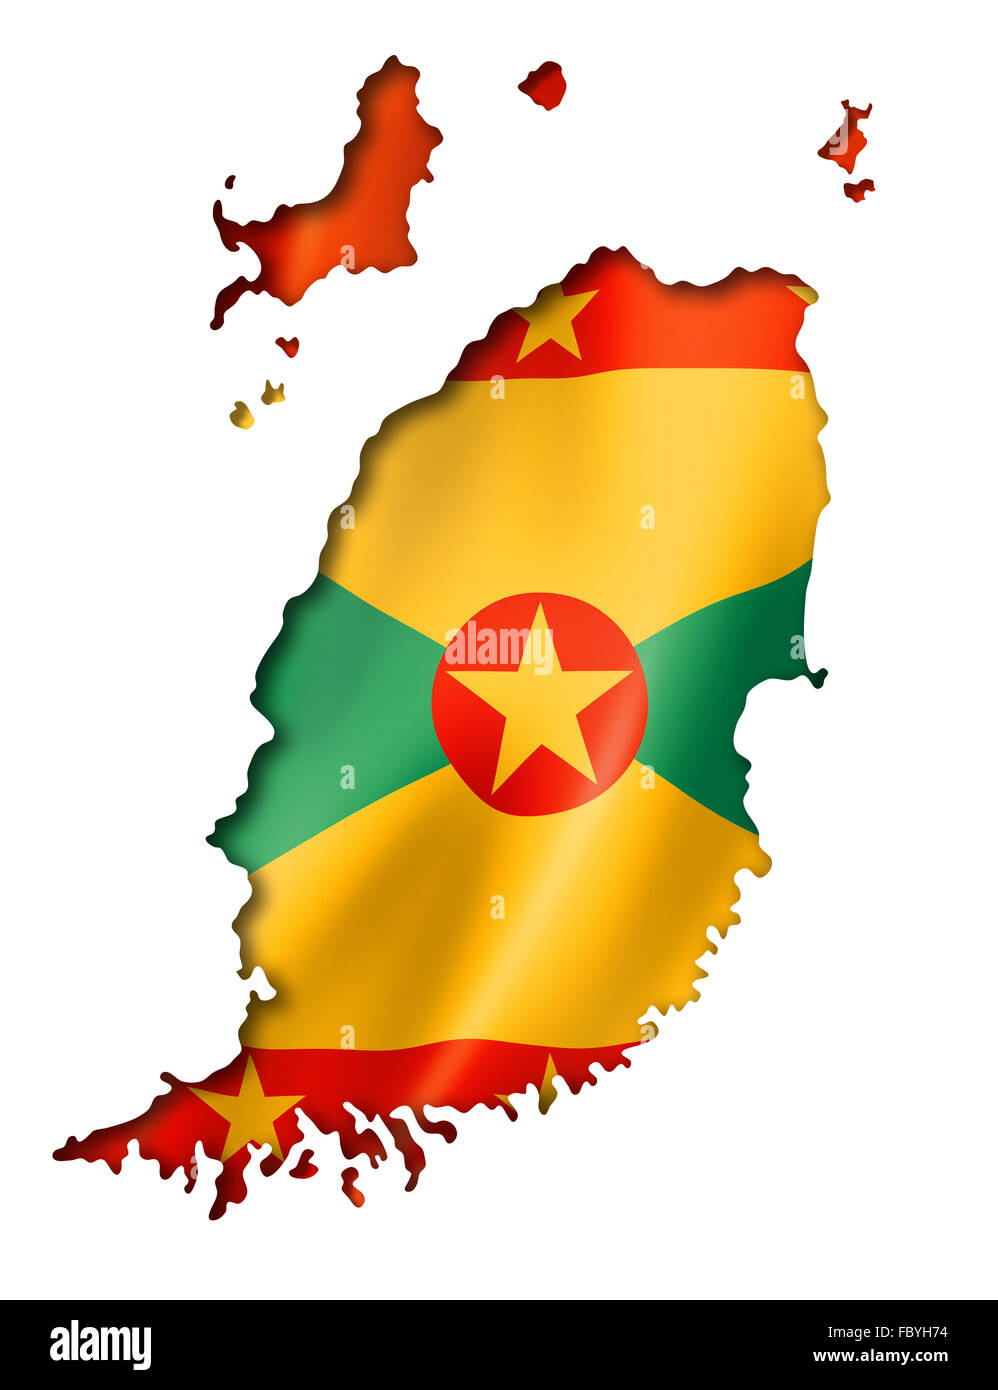 Grenada flag map Stock Photo - Alamy